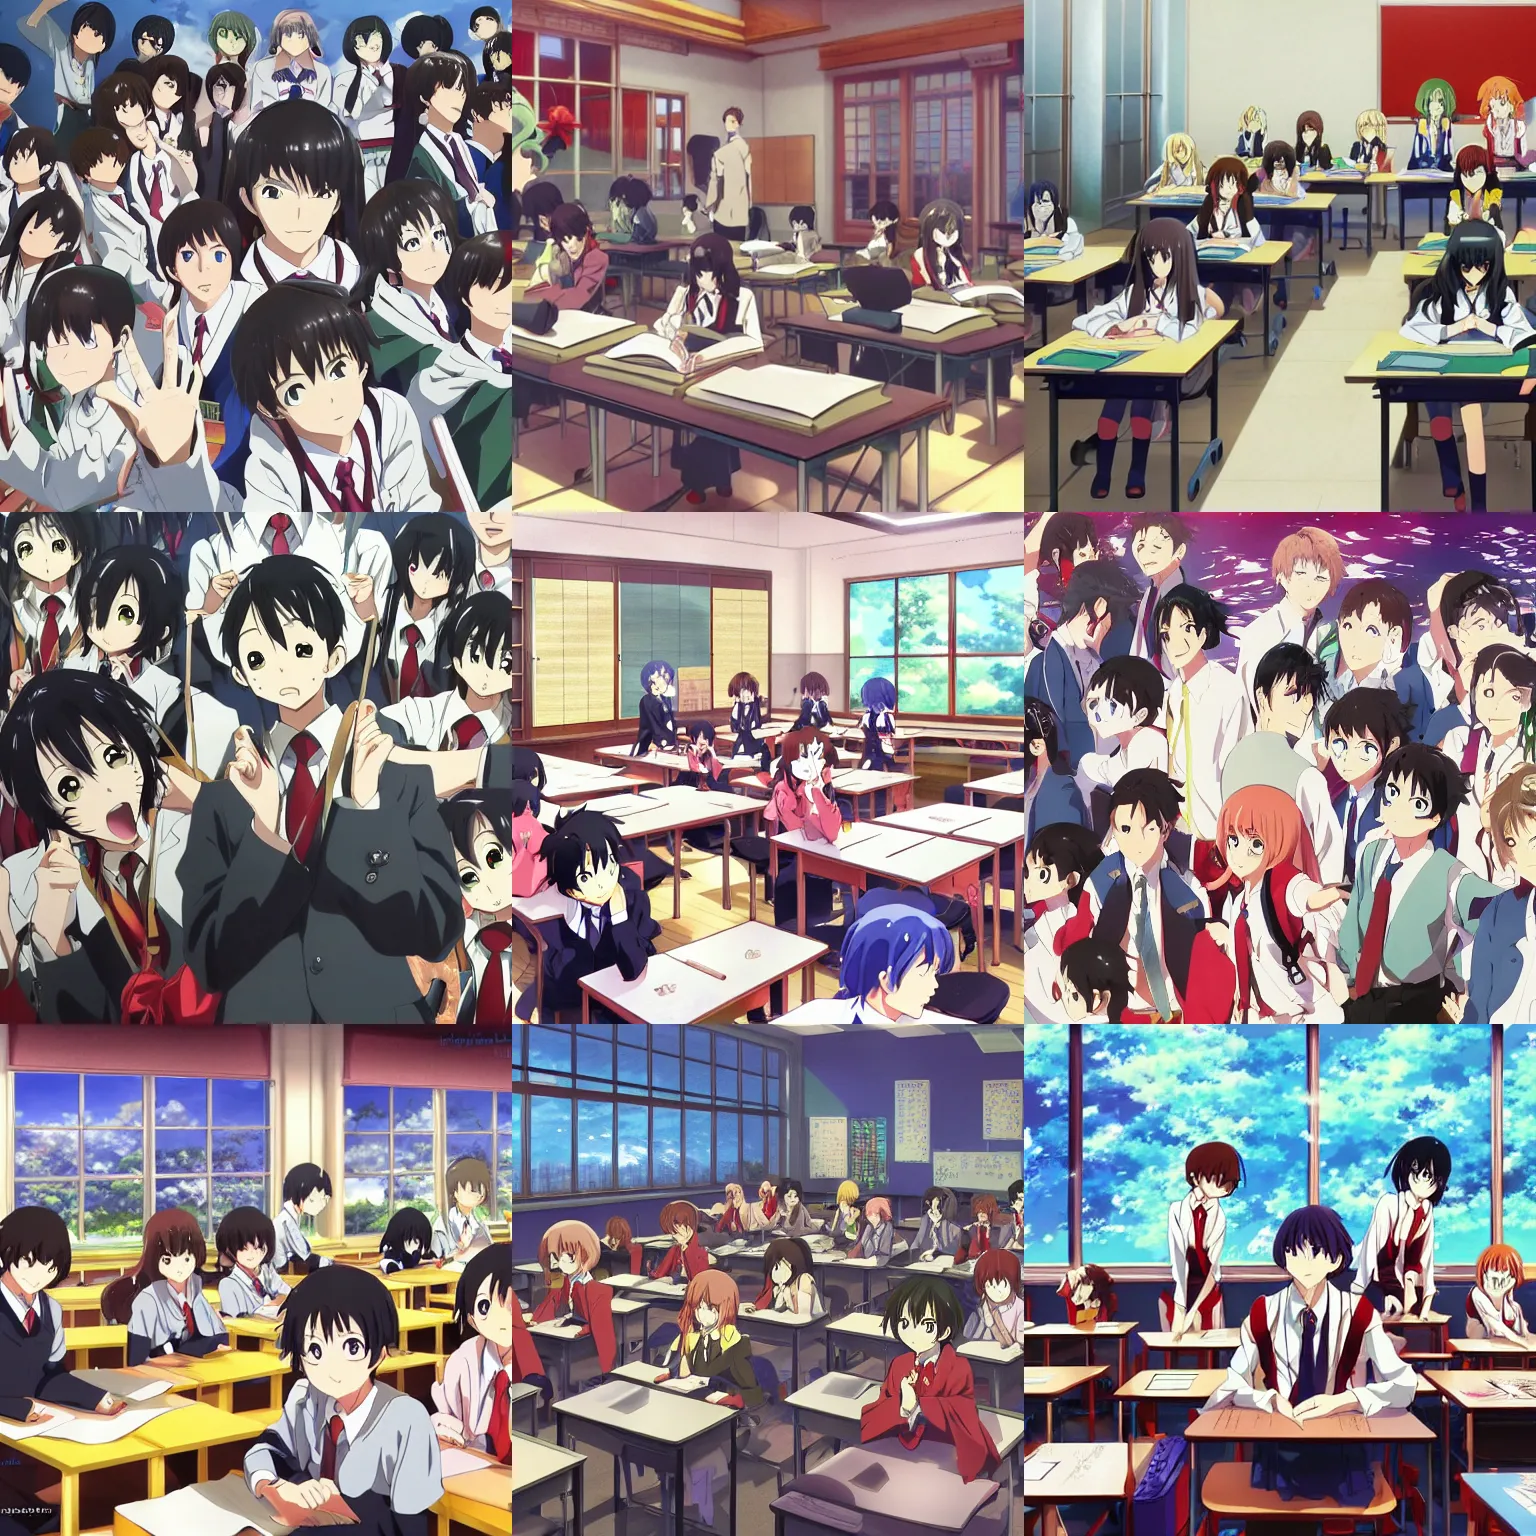 Prompt: Incredibly beautiful anime visual of a classroom, trending on artstation, TV Tokyo 2010s anime series, 4K, art by Hayao Miyazaki, Shigenori Soejima, Mamoru Hosoda